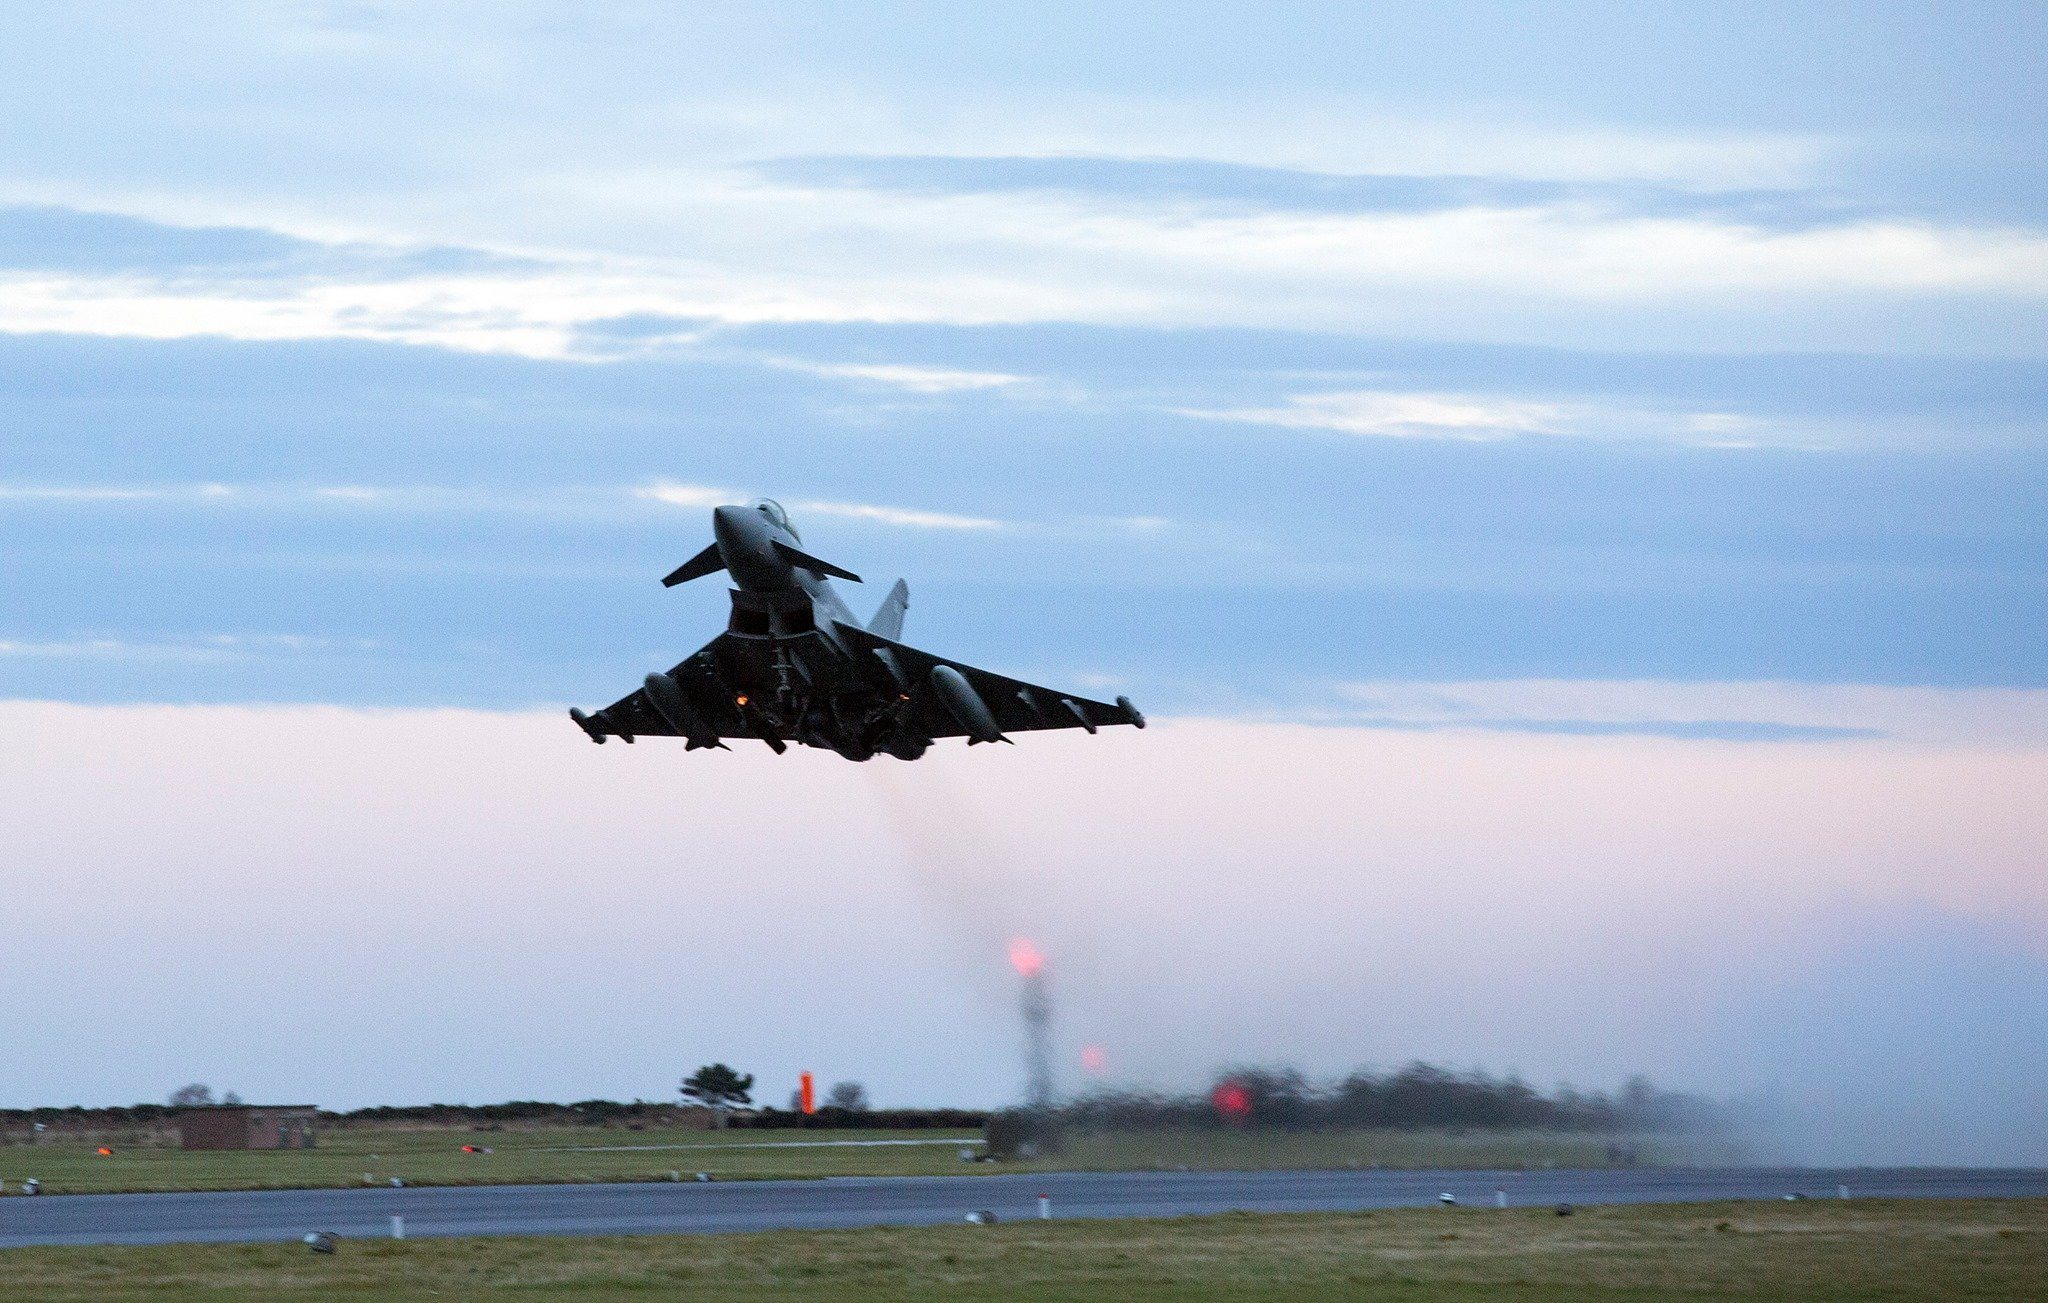 An RAF jet taking off at RAF Lossiemouth, Scotland